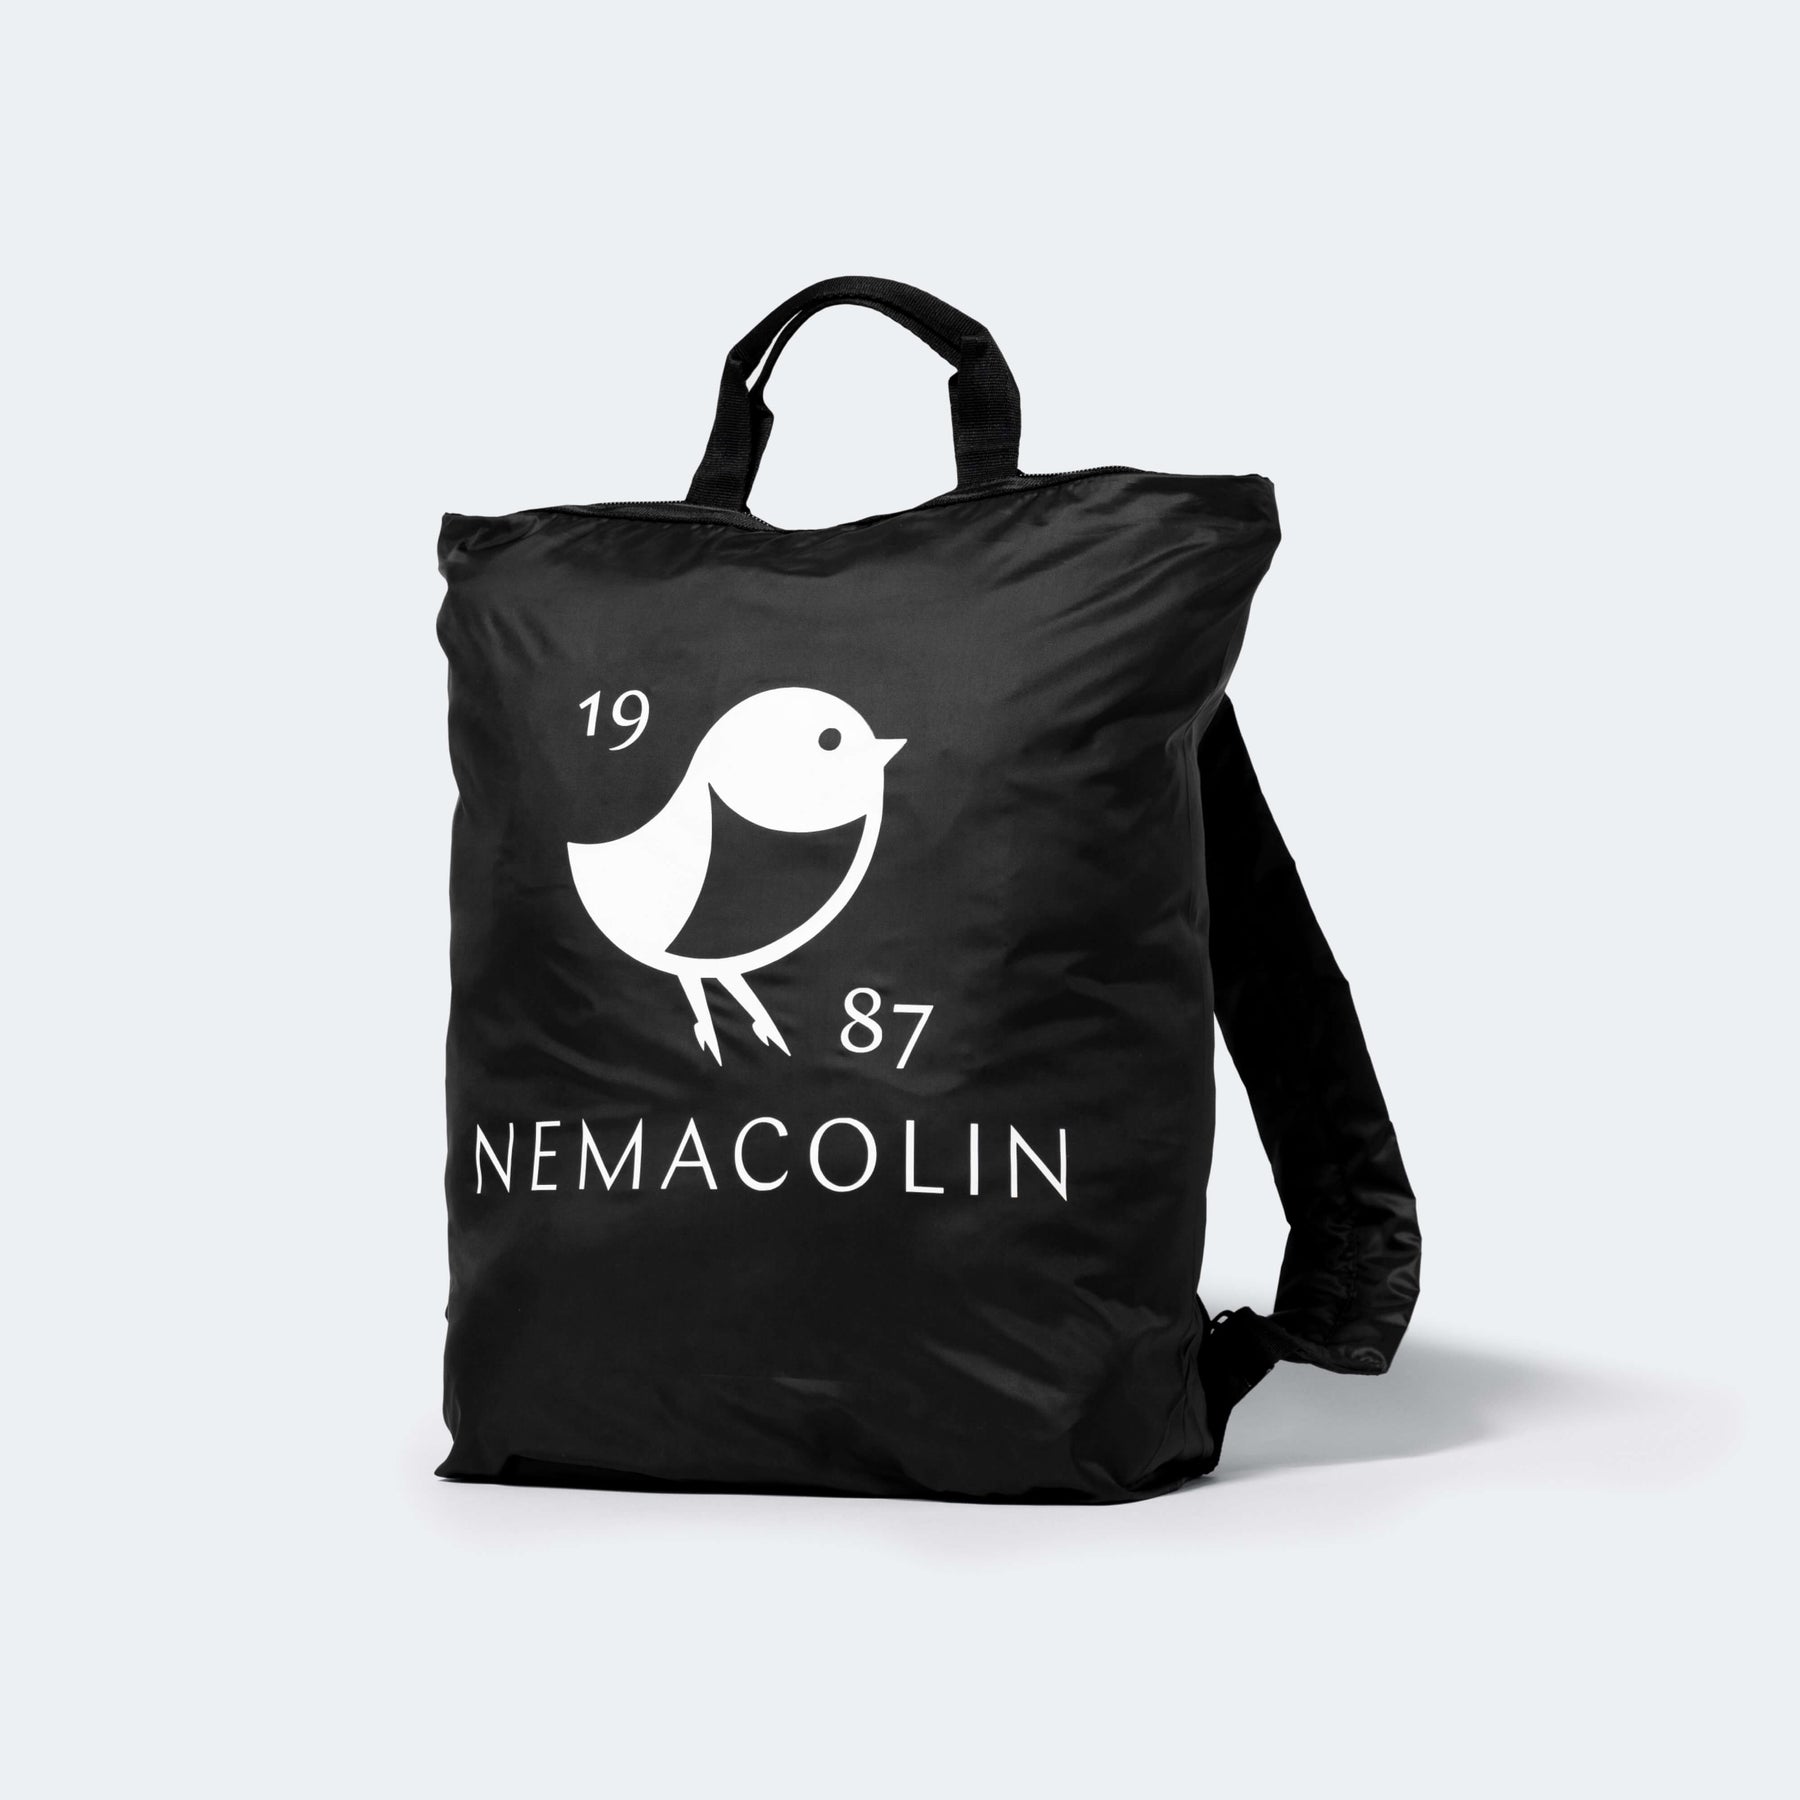 Nemacolin Shop Nemacolin Apparel, Homeware & Accessories